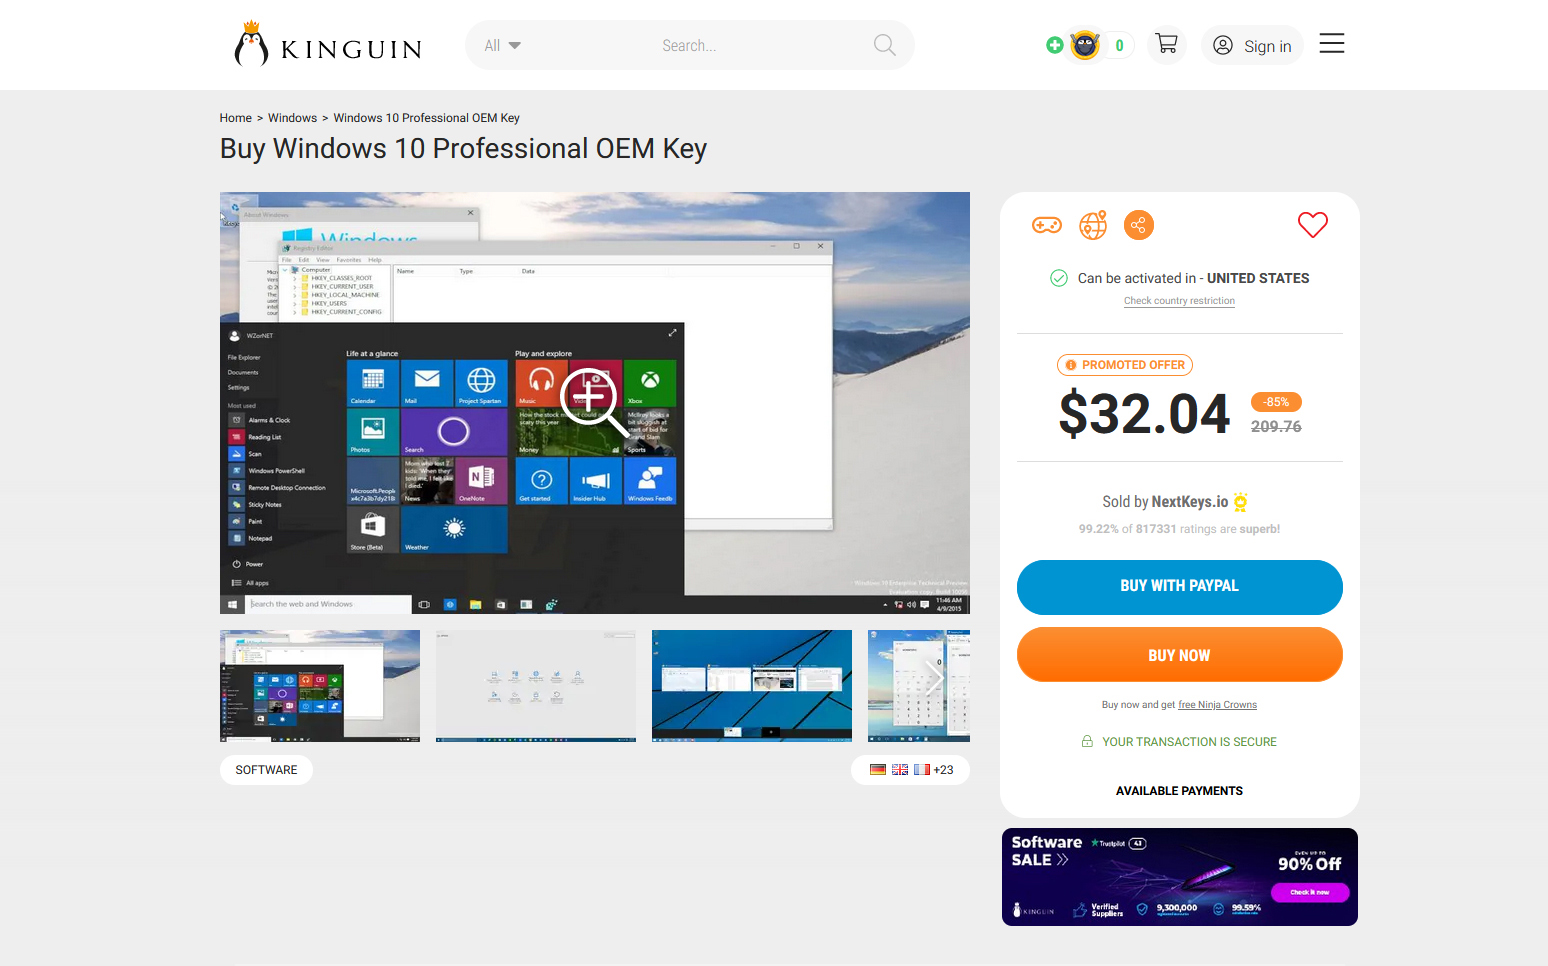 Kinguin Windows 10 Pro key product page